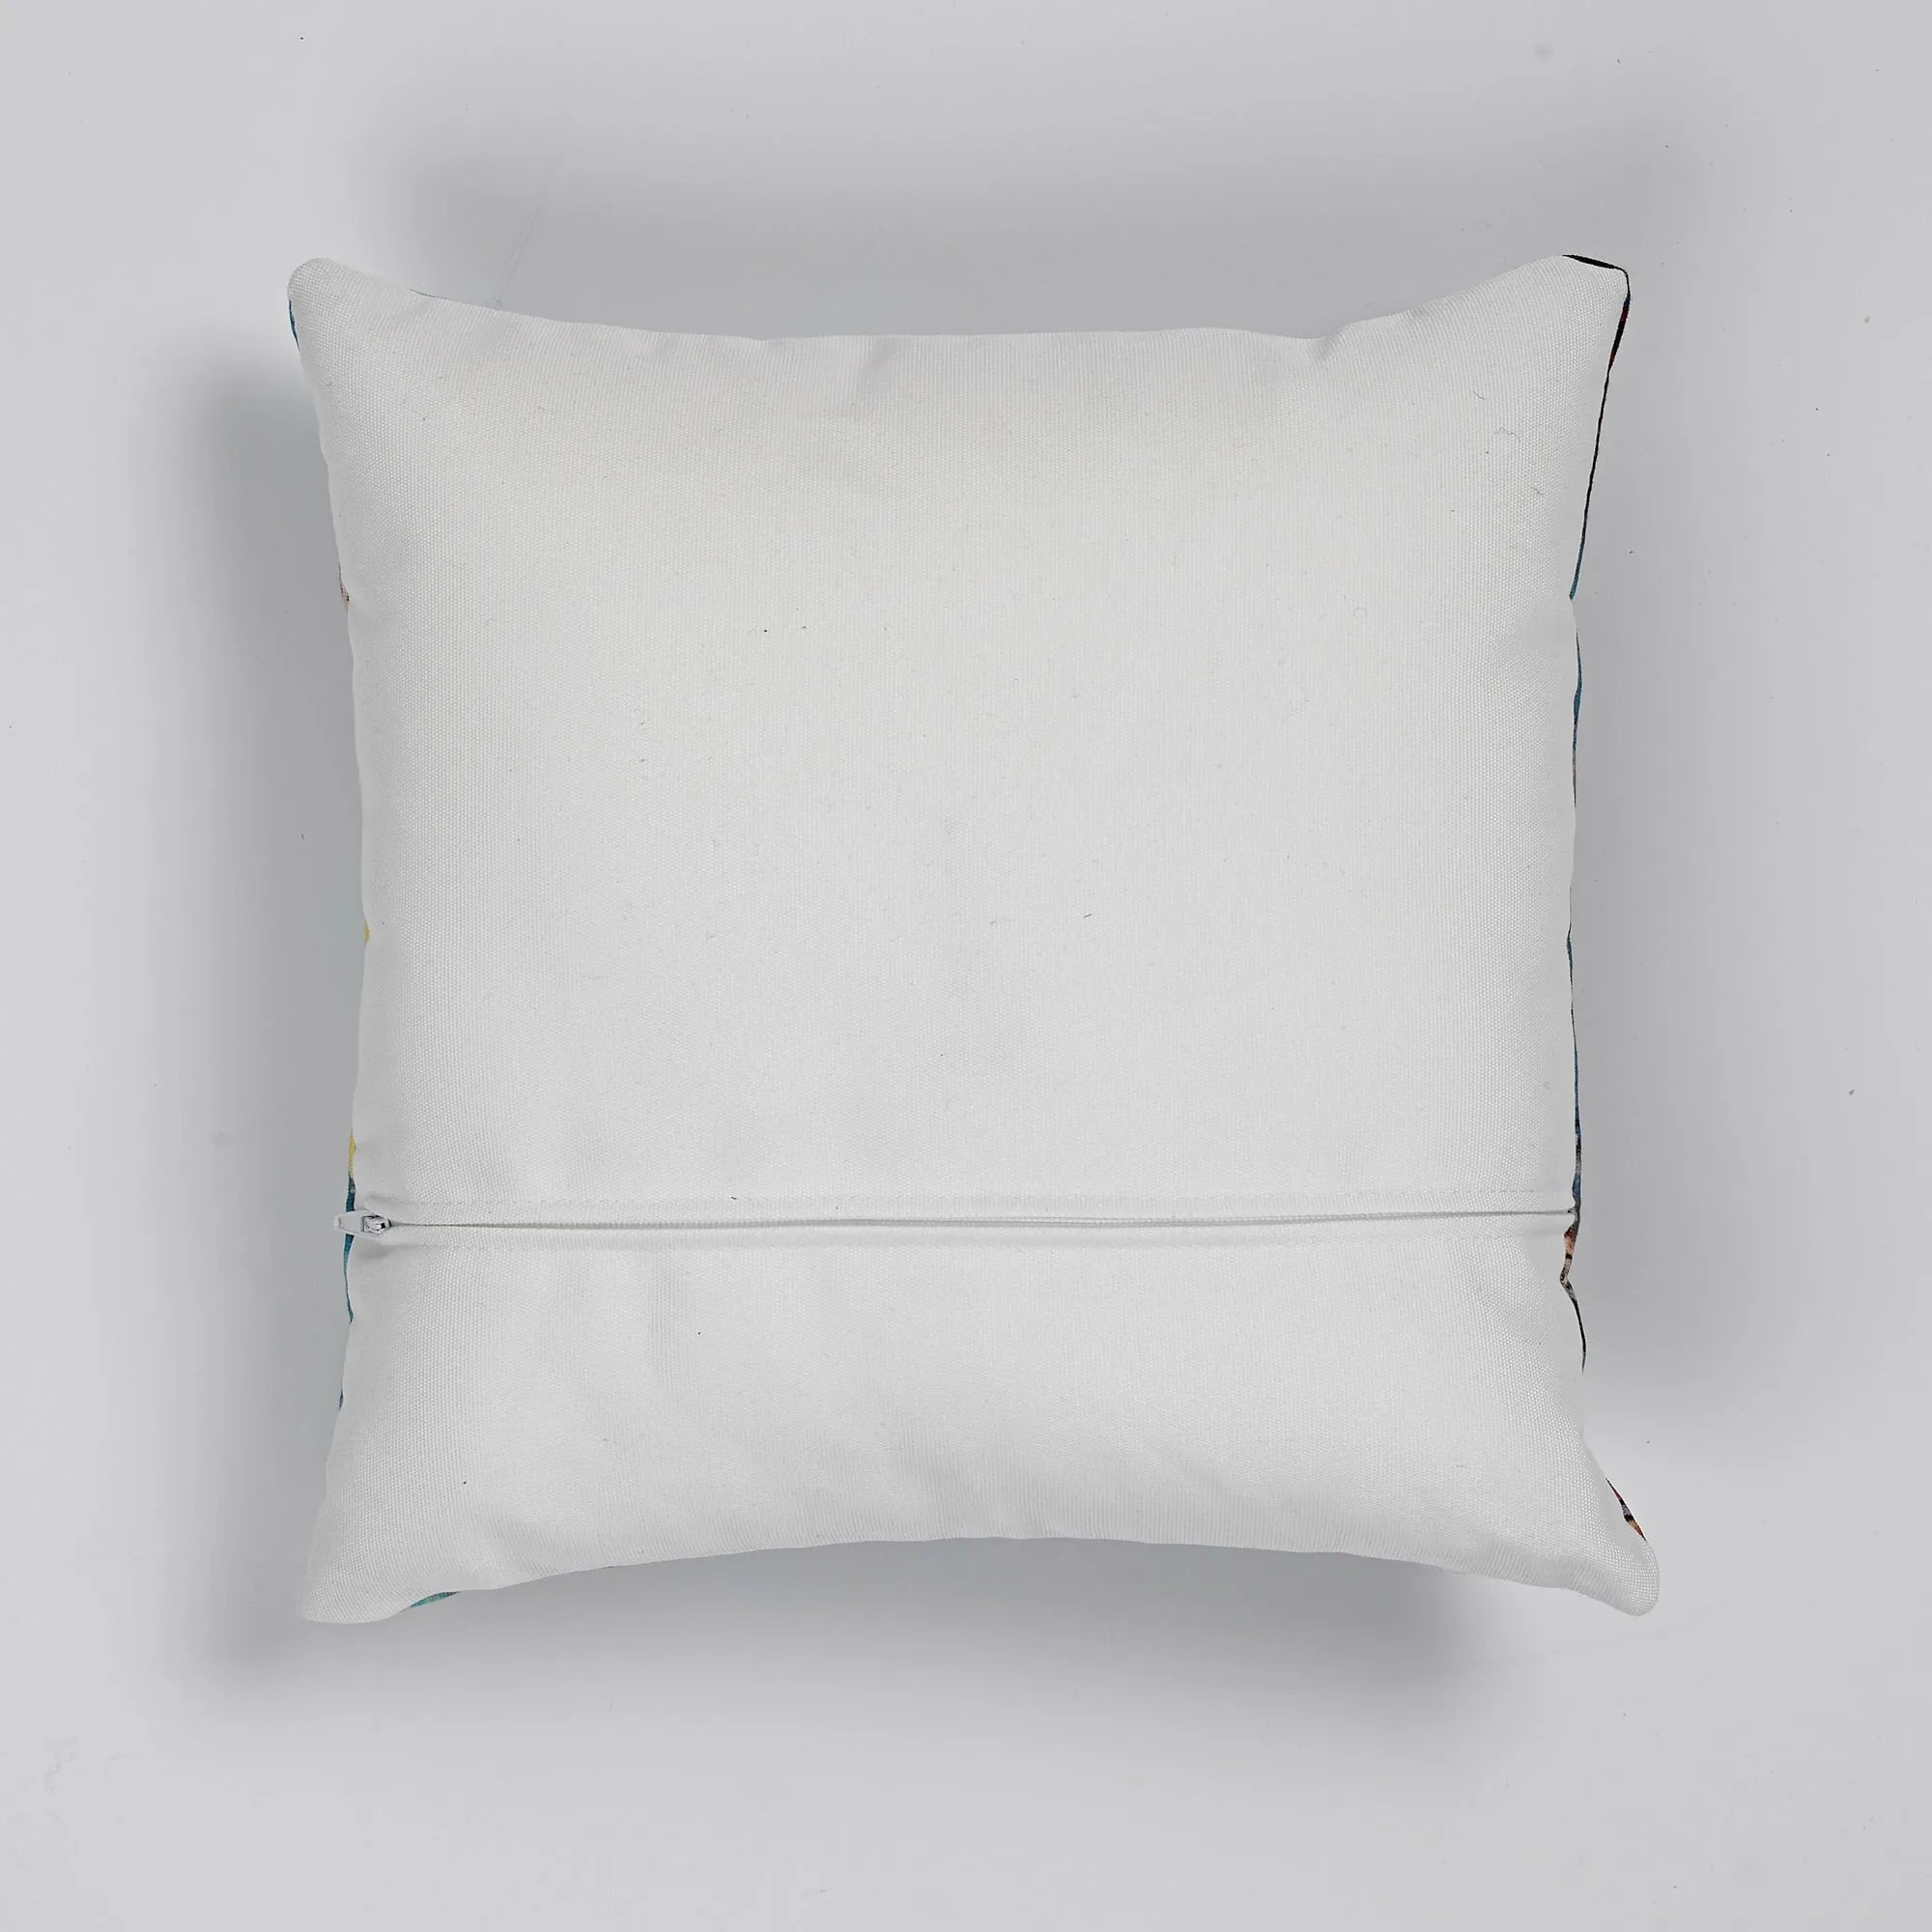 Lotus Candy Cushion - Decorative Throw Pillow - Throw Pillows - Aesthetic Art